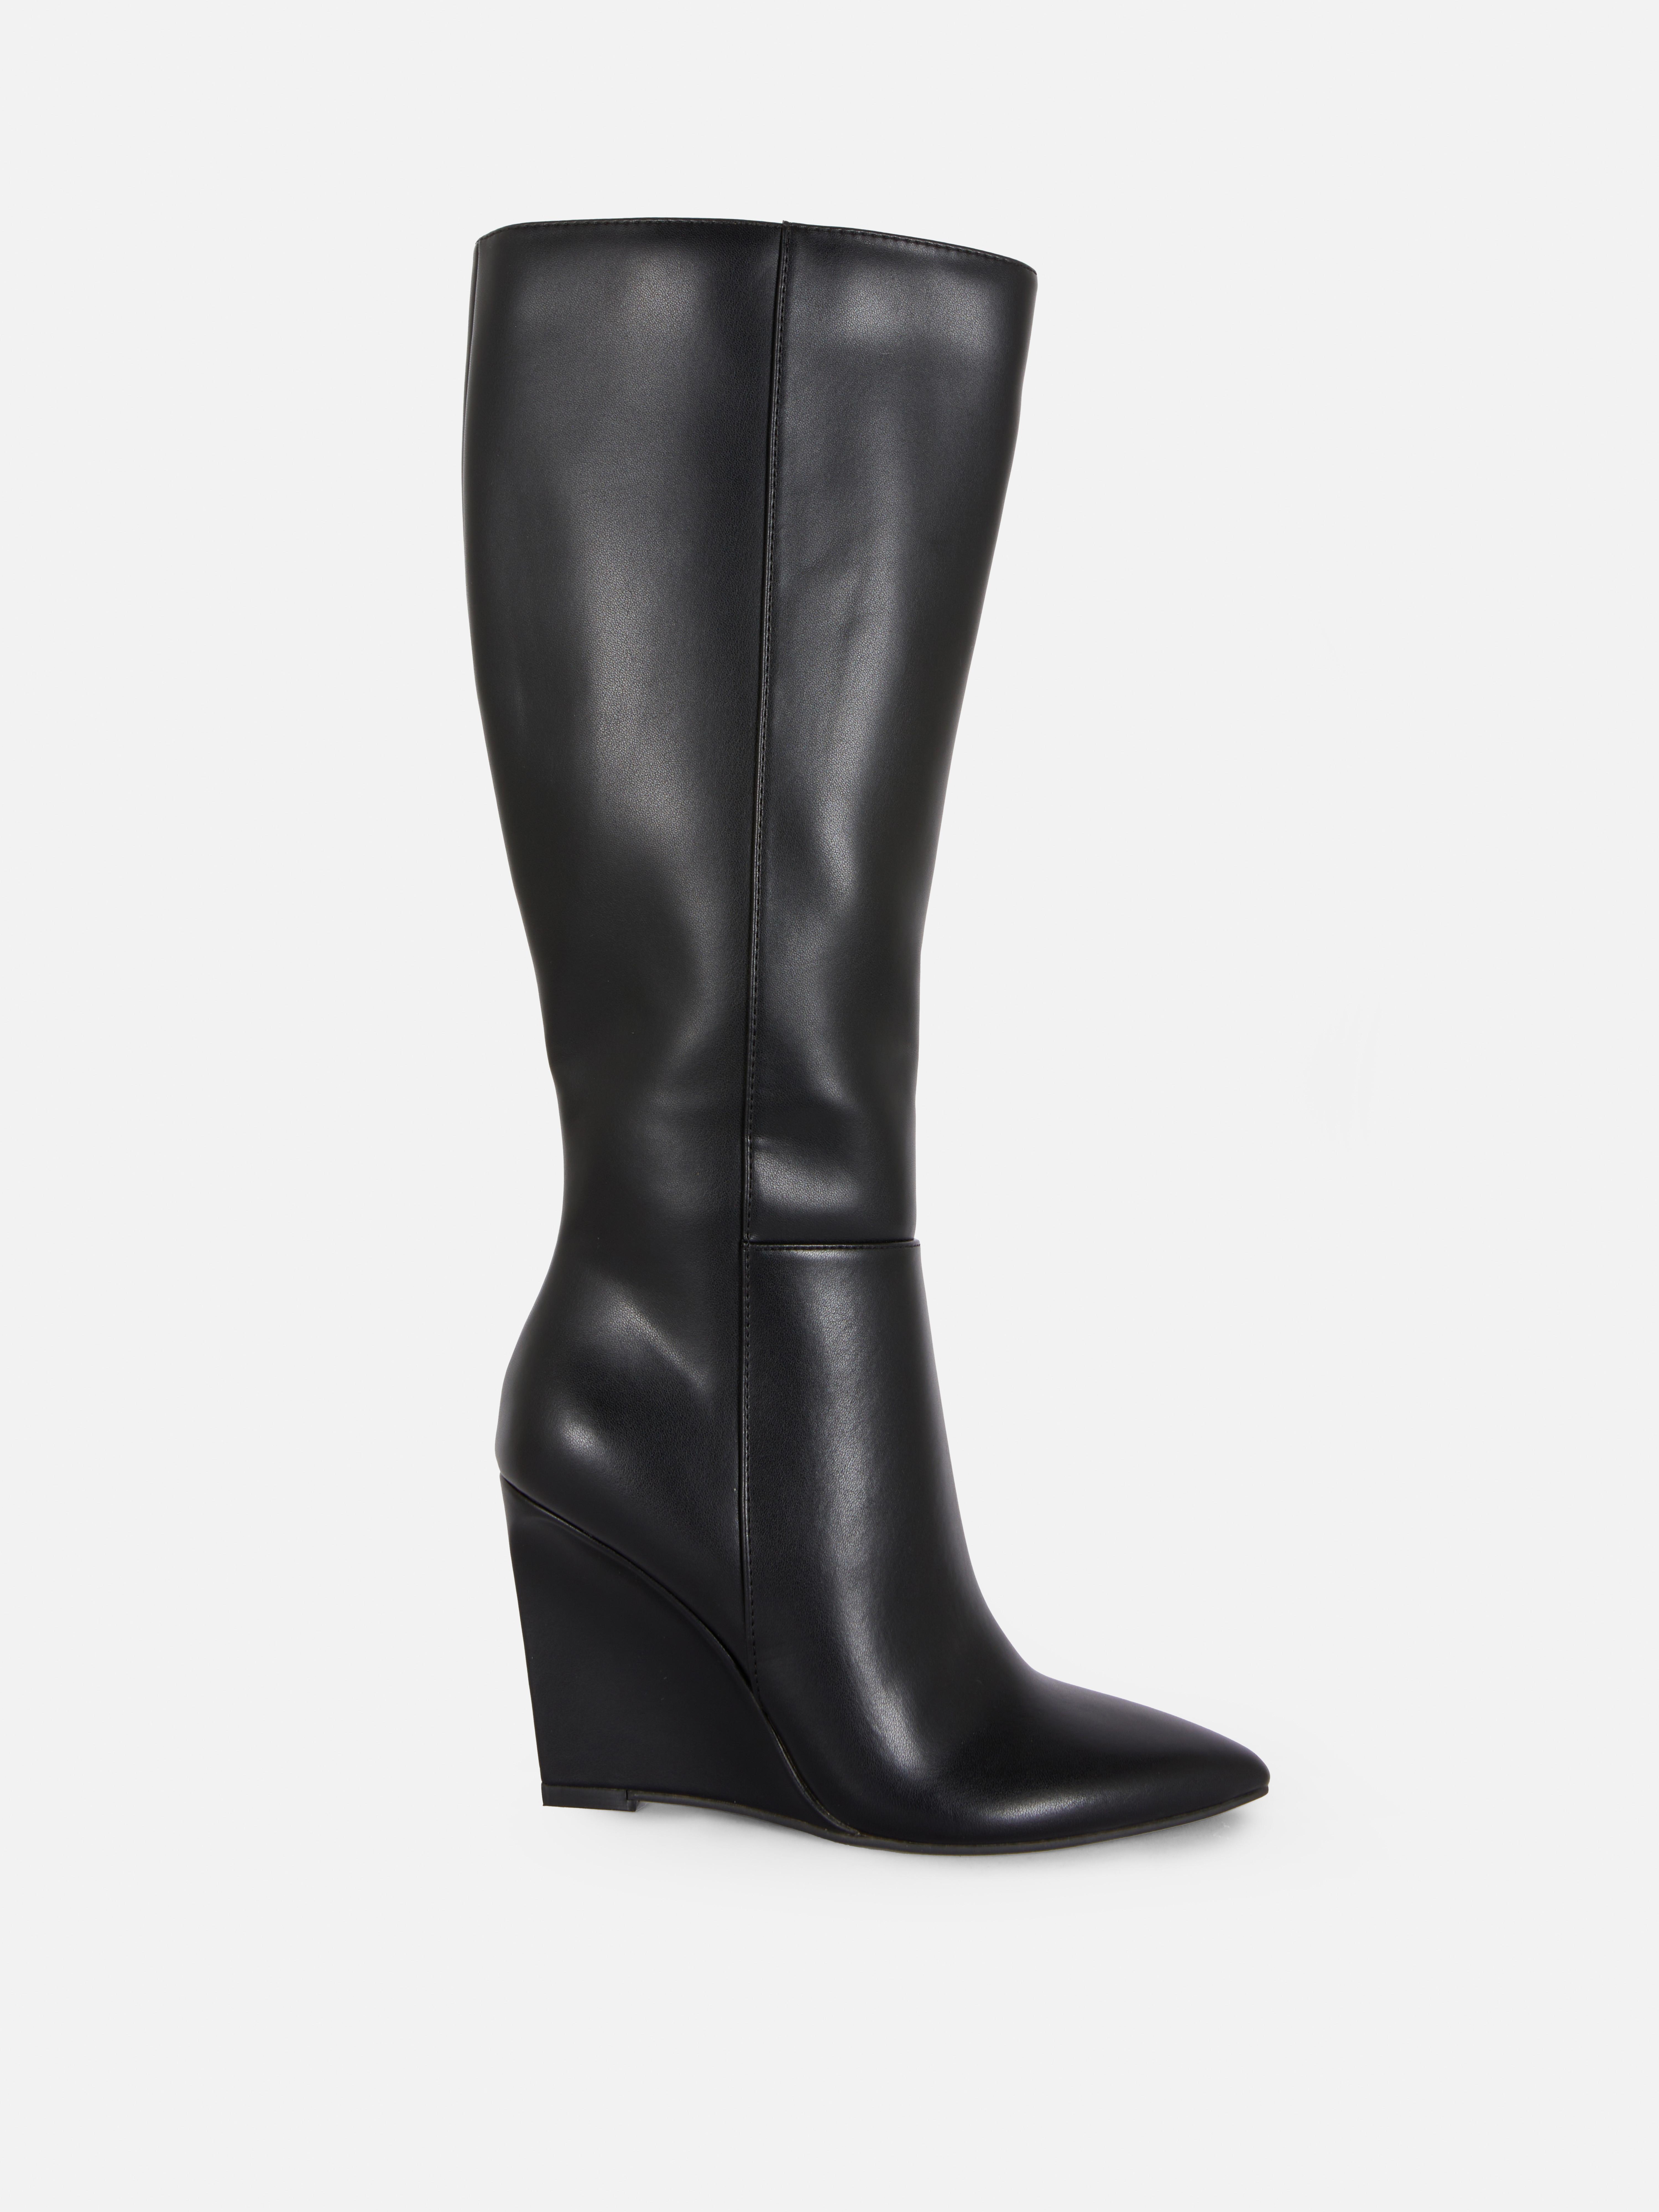 Rita Ora Knee-High Wedge Boots